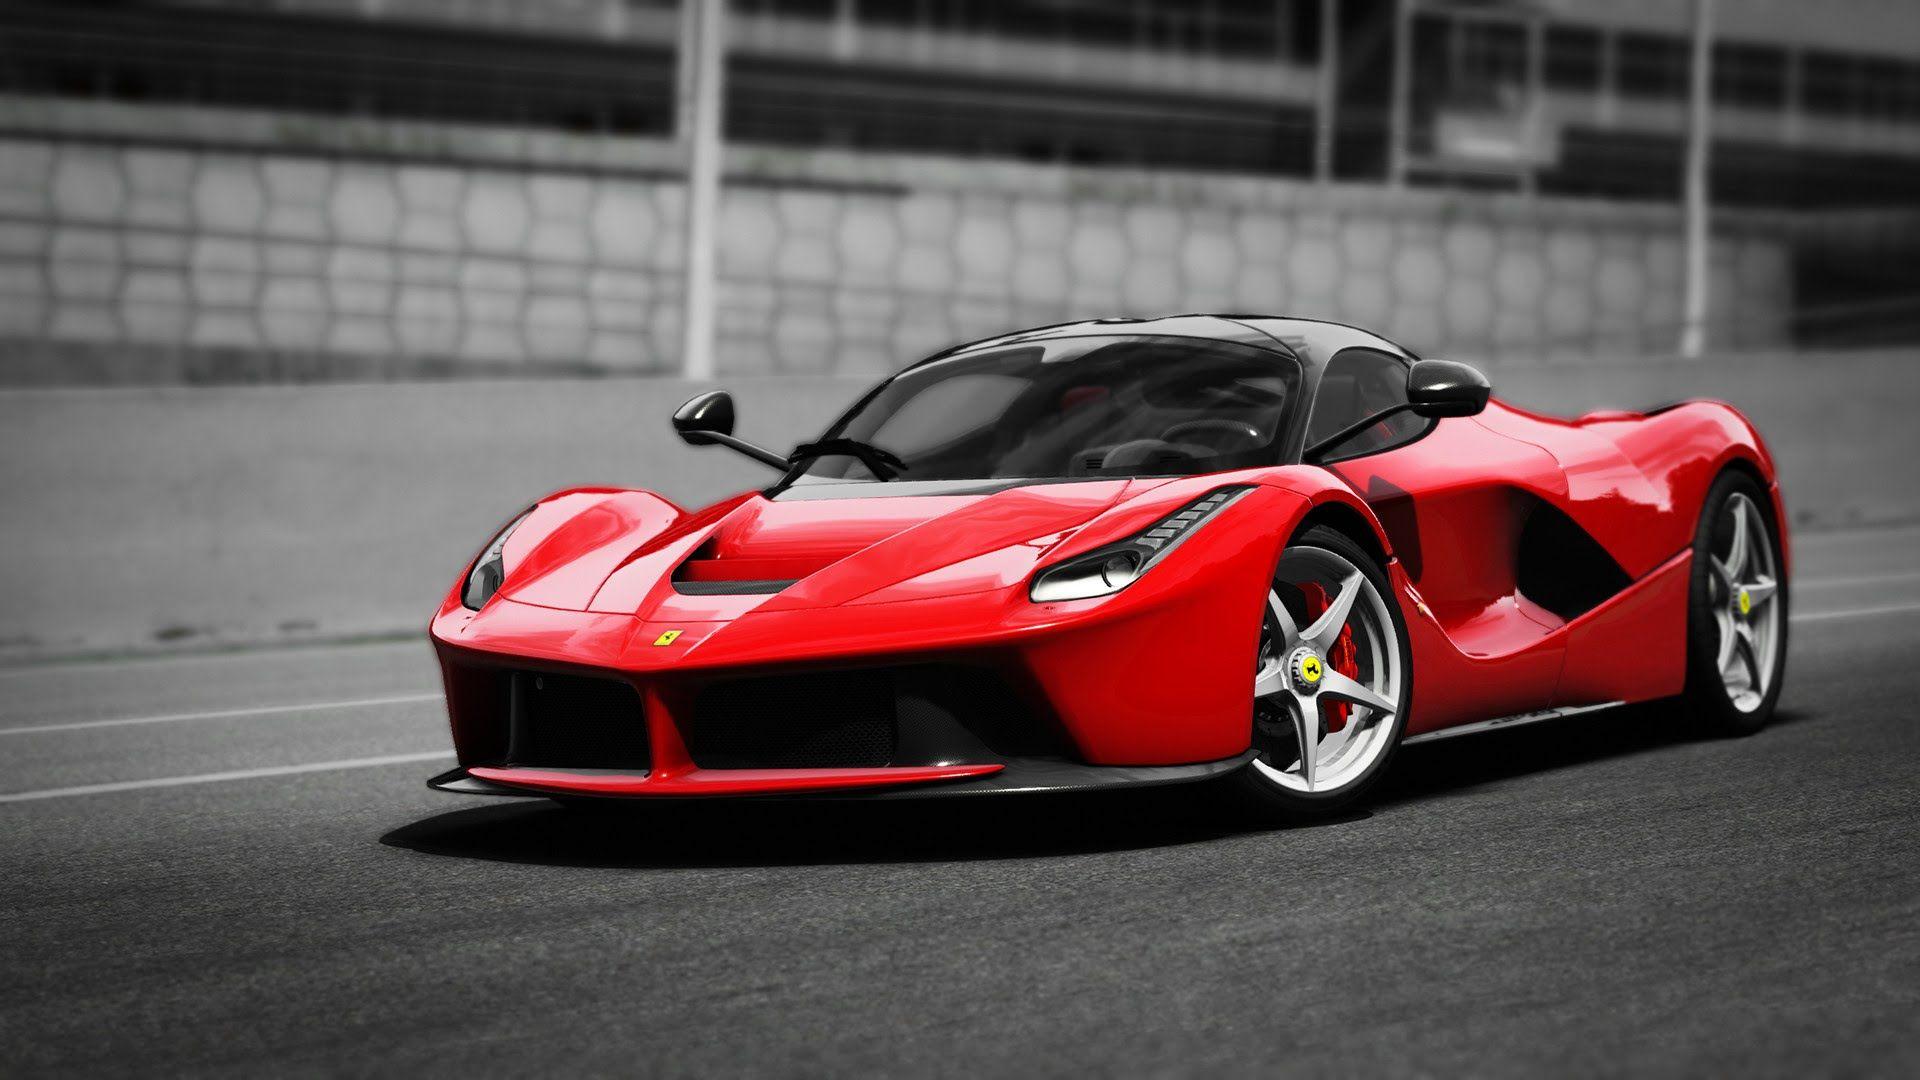 Ferrari Laferrari Backgrounds Free Download